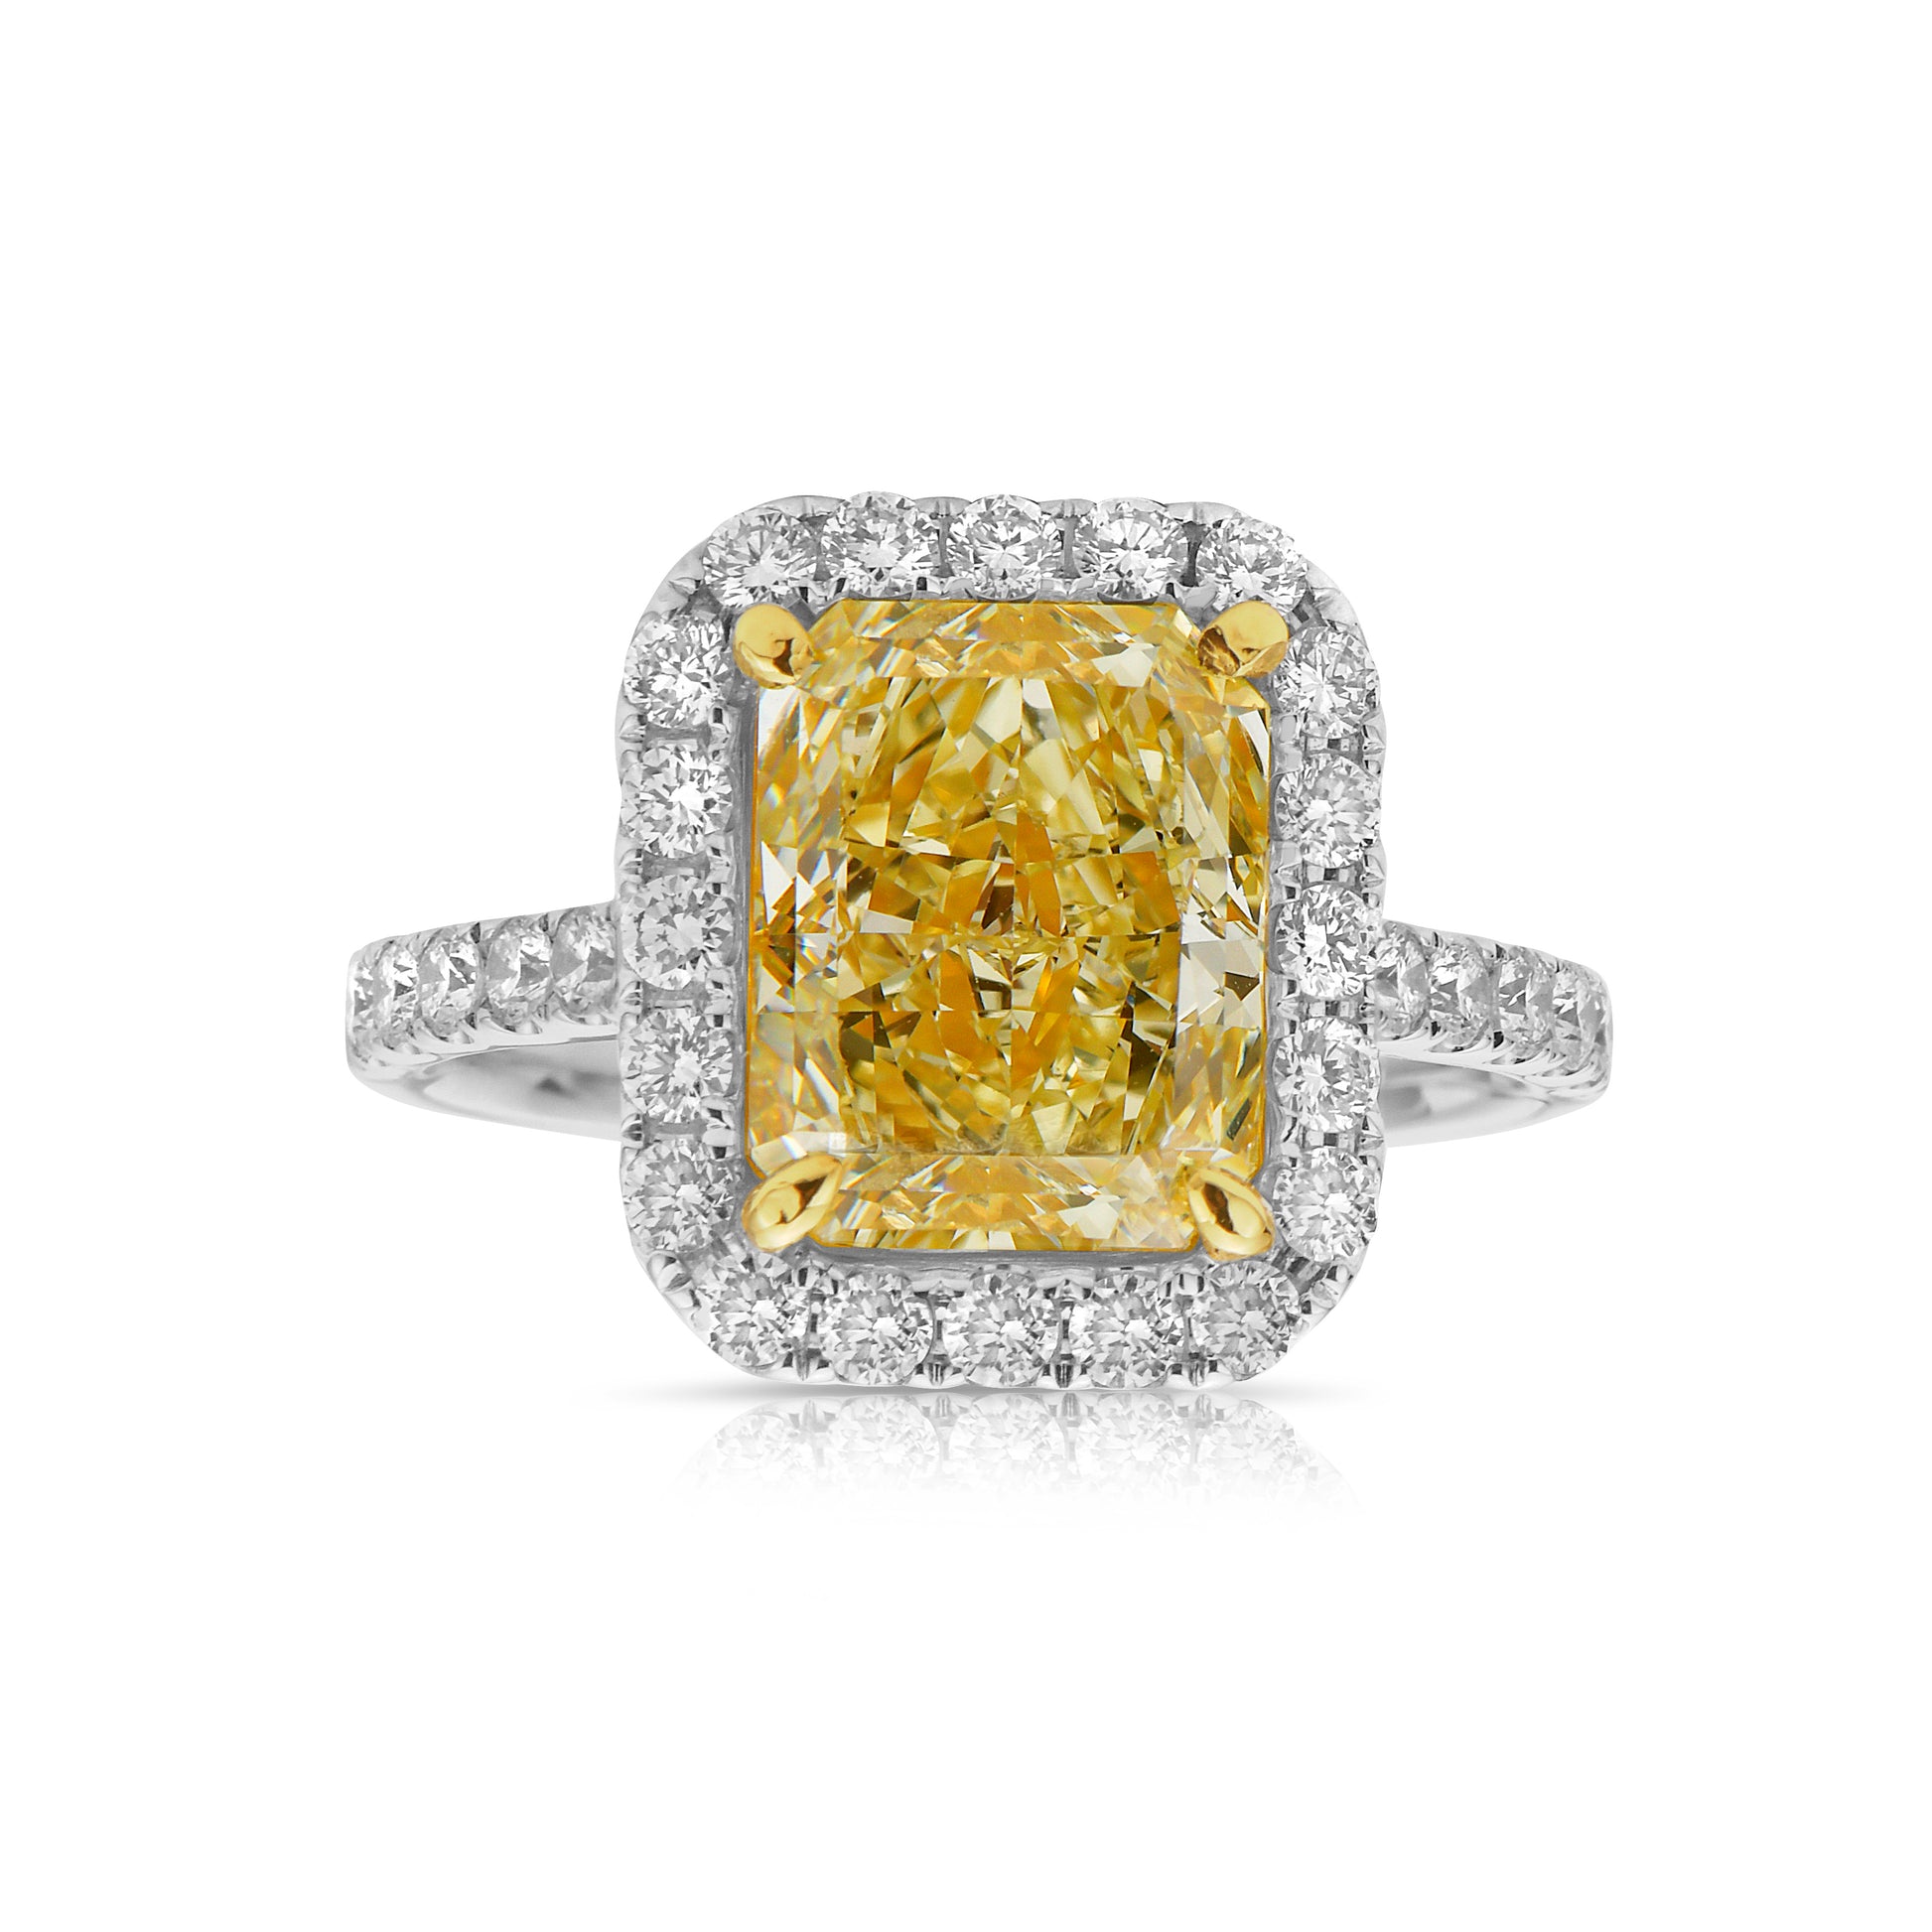 Halo diamond ring. Yellow halo diamond ring. Yellow diamond engagement ring. Light yellow diamond ring. Yellow diamond jewelry.